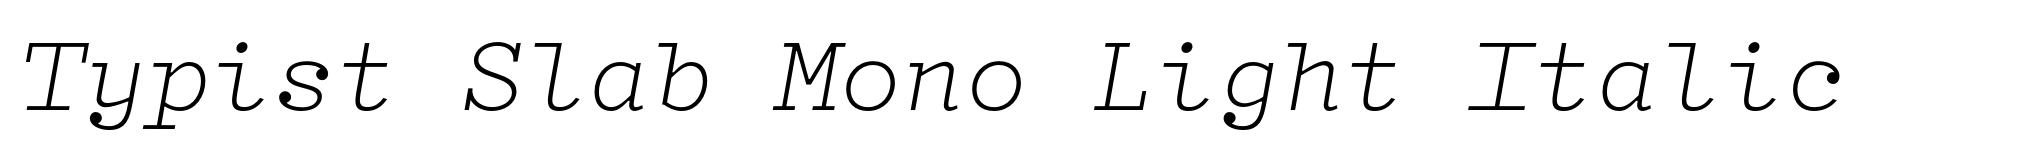 Typist Slab Mono Light Italic image